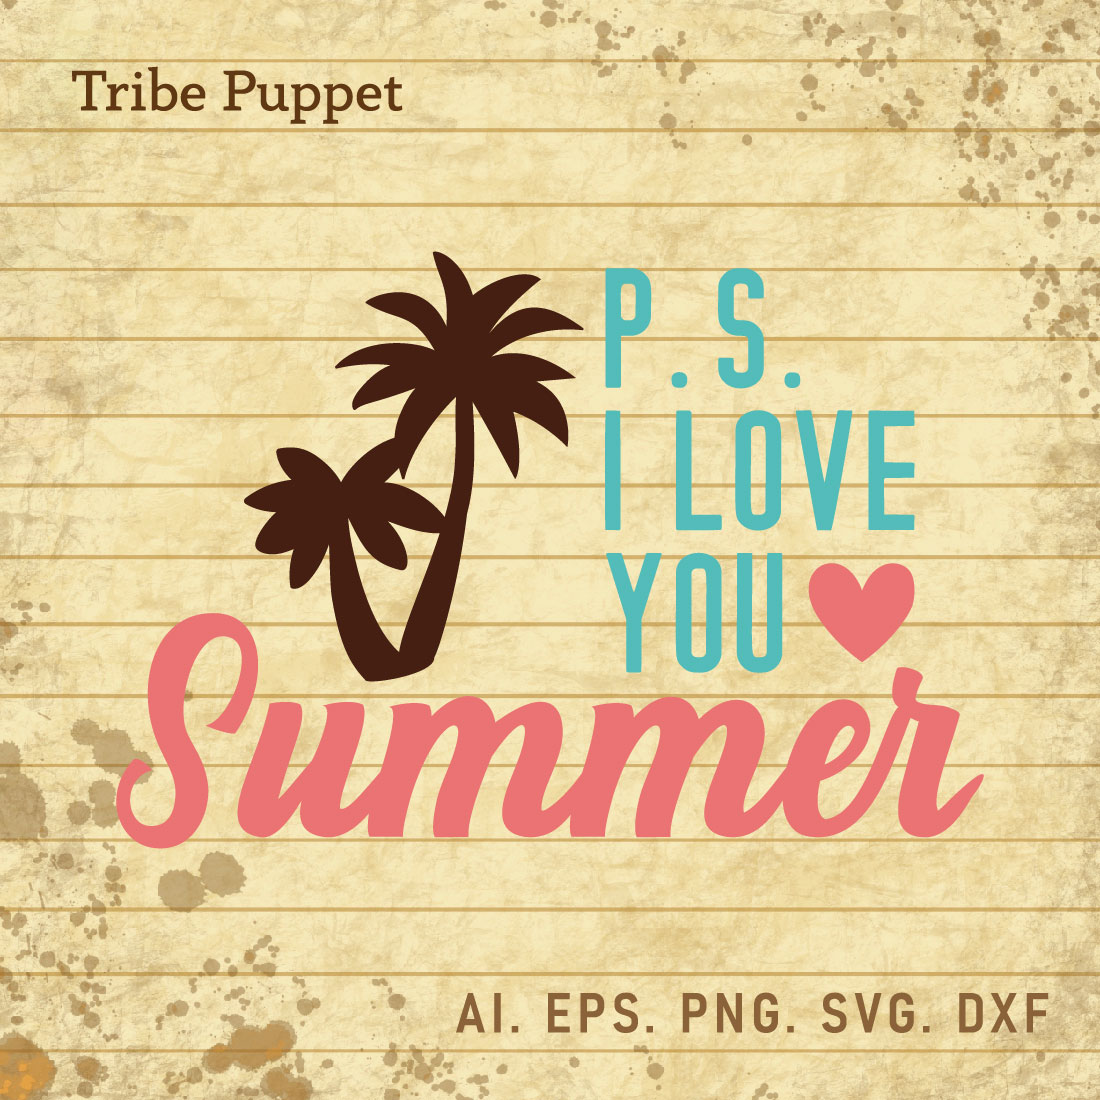 Summer SVG cover image.